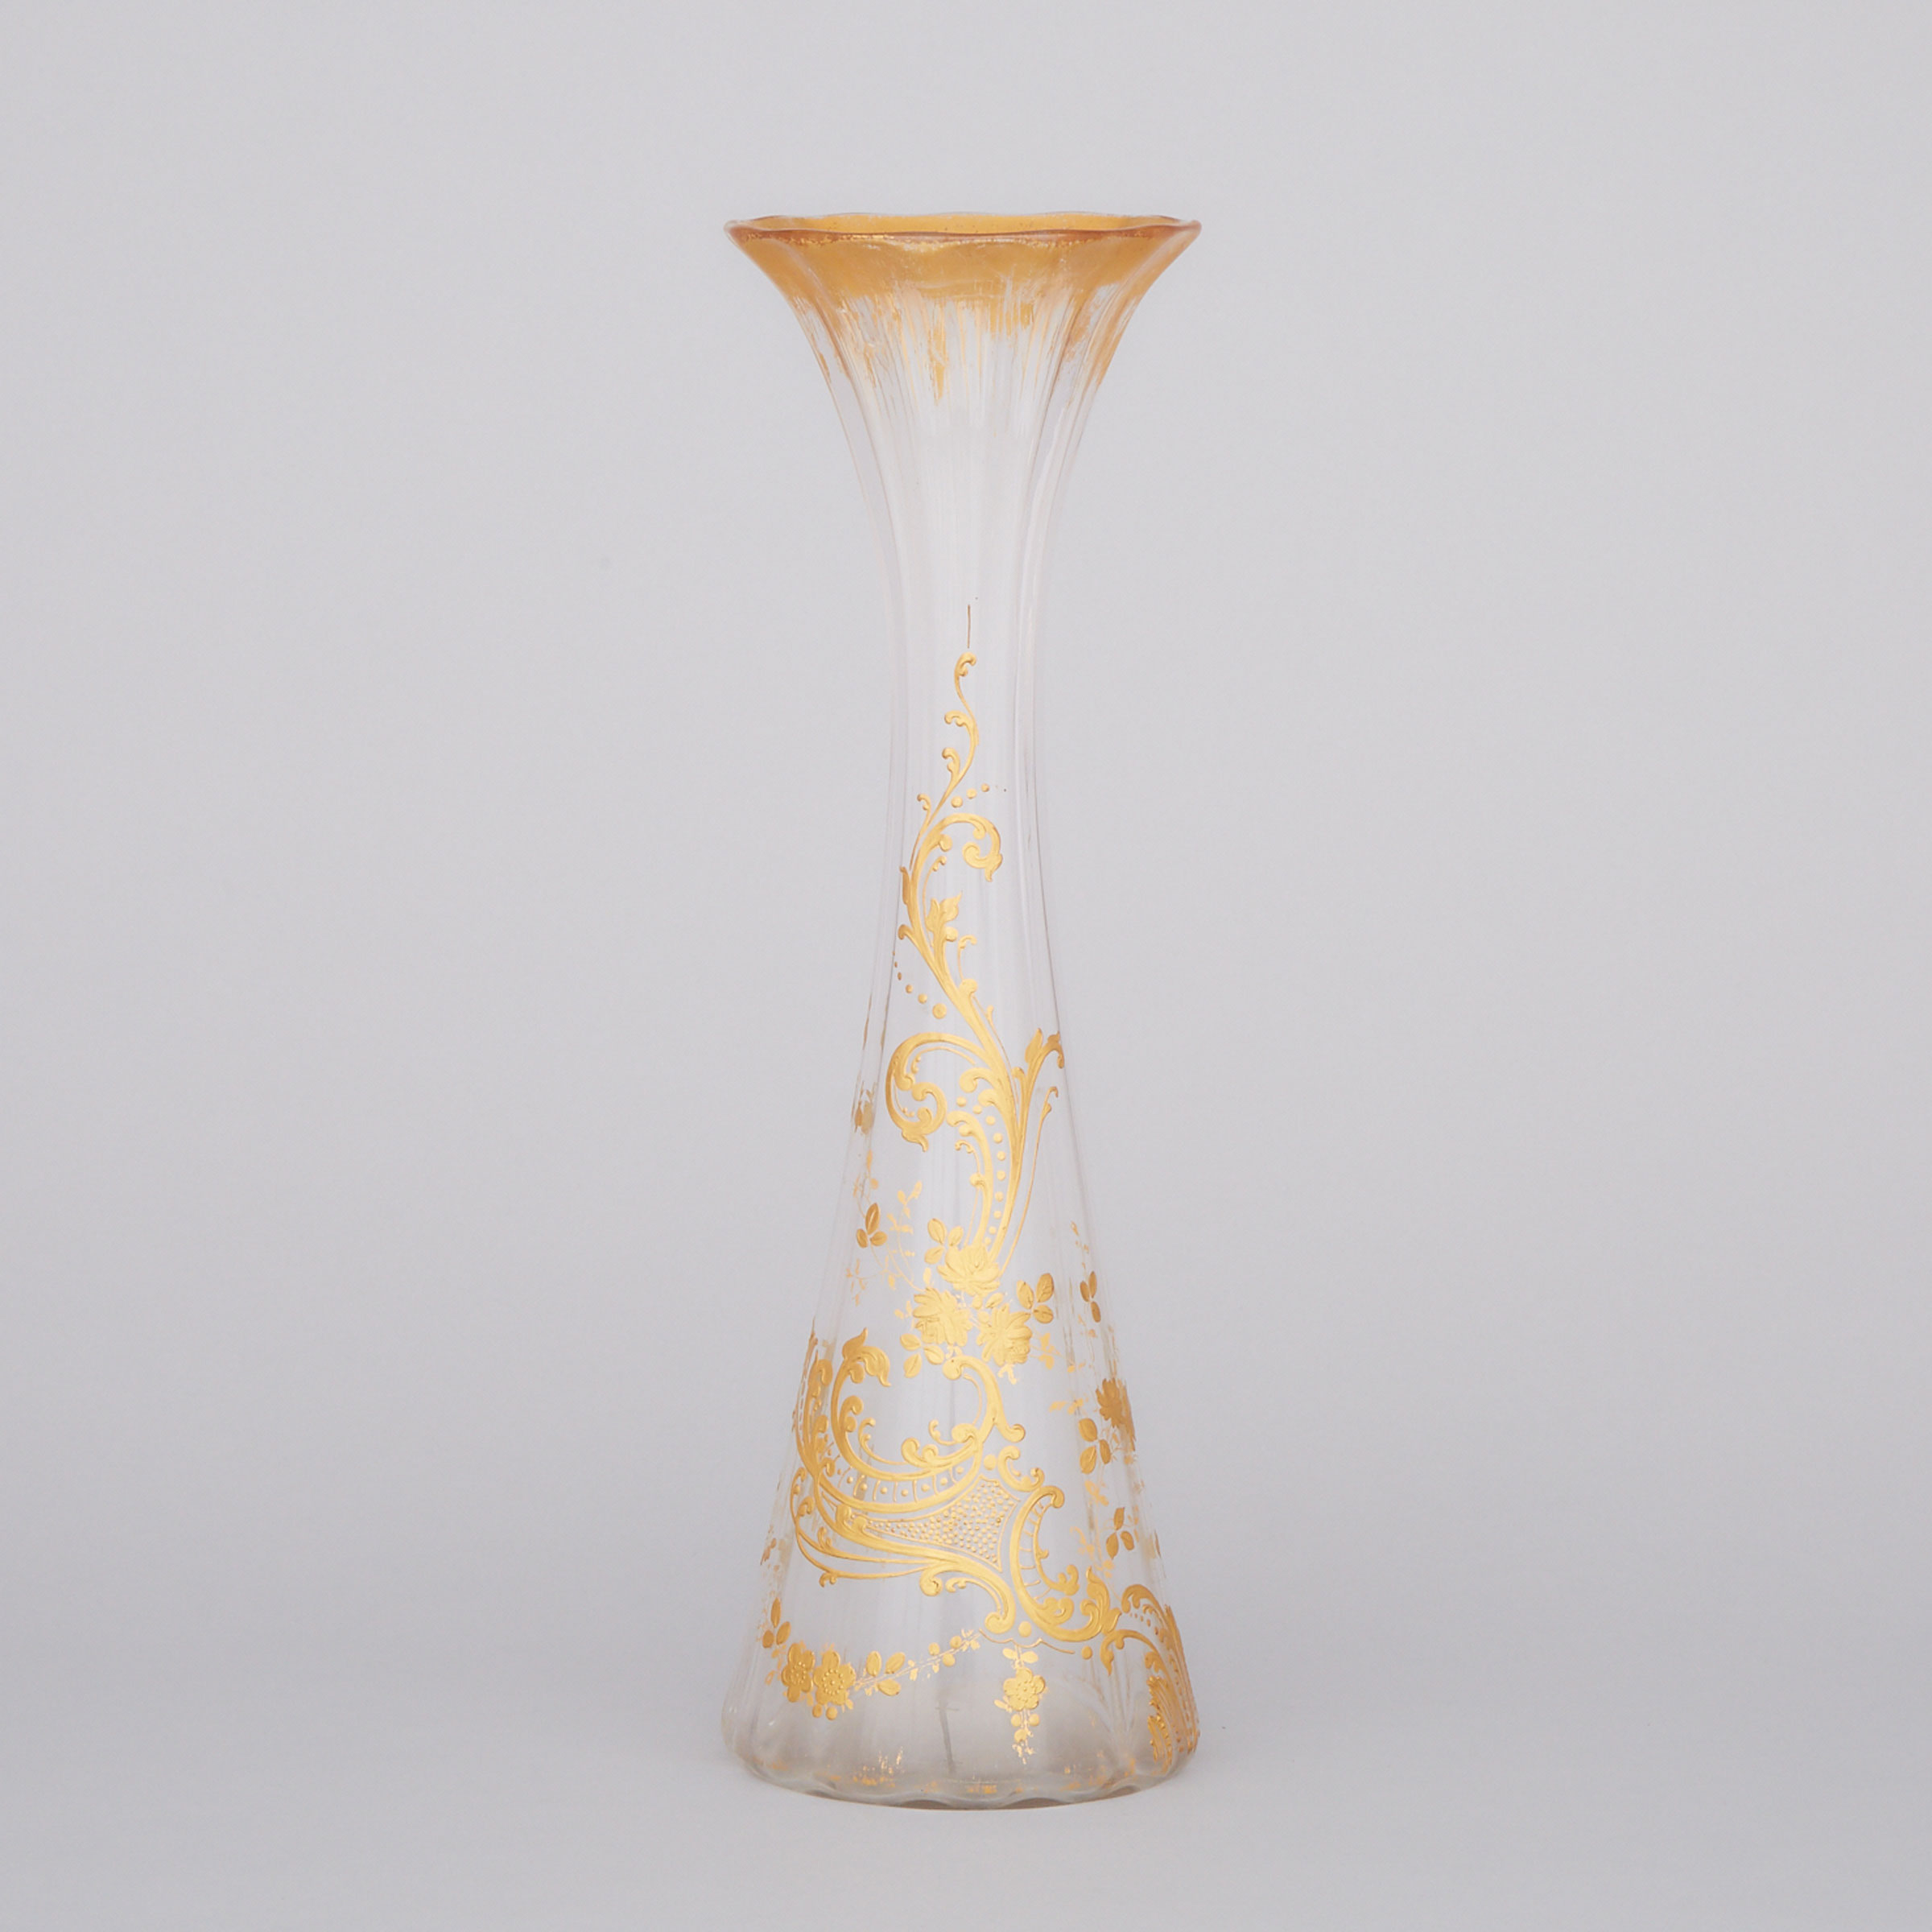 Daum Gilt Decorated Glass Vase, late 19th century